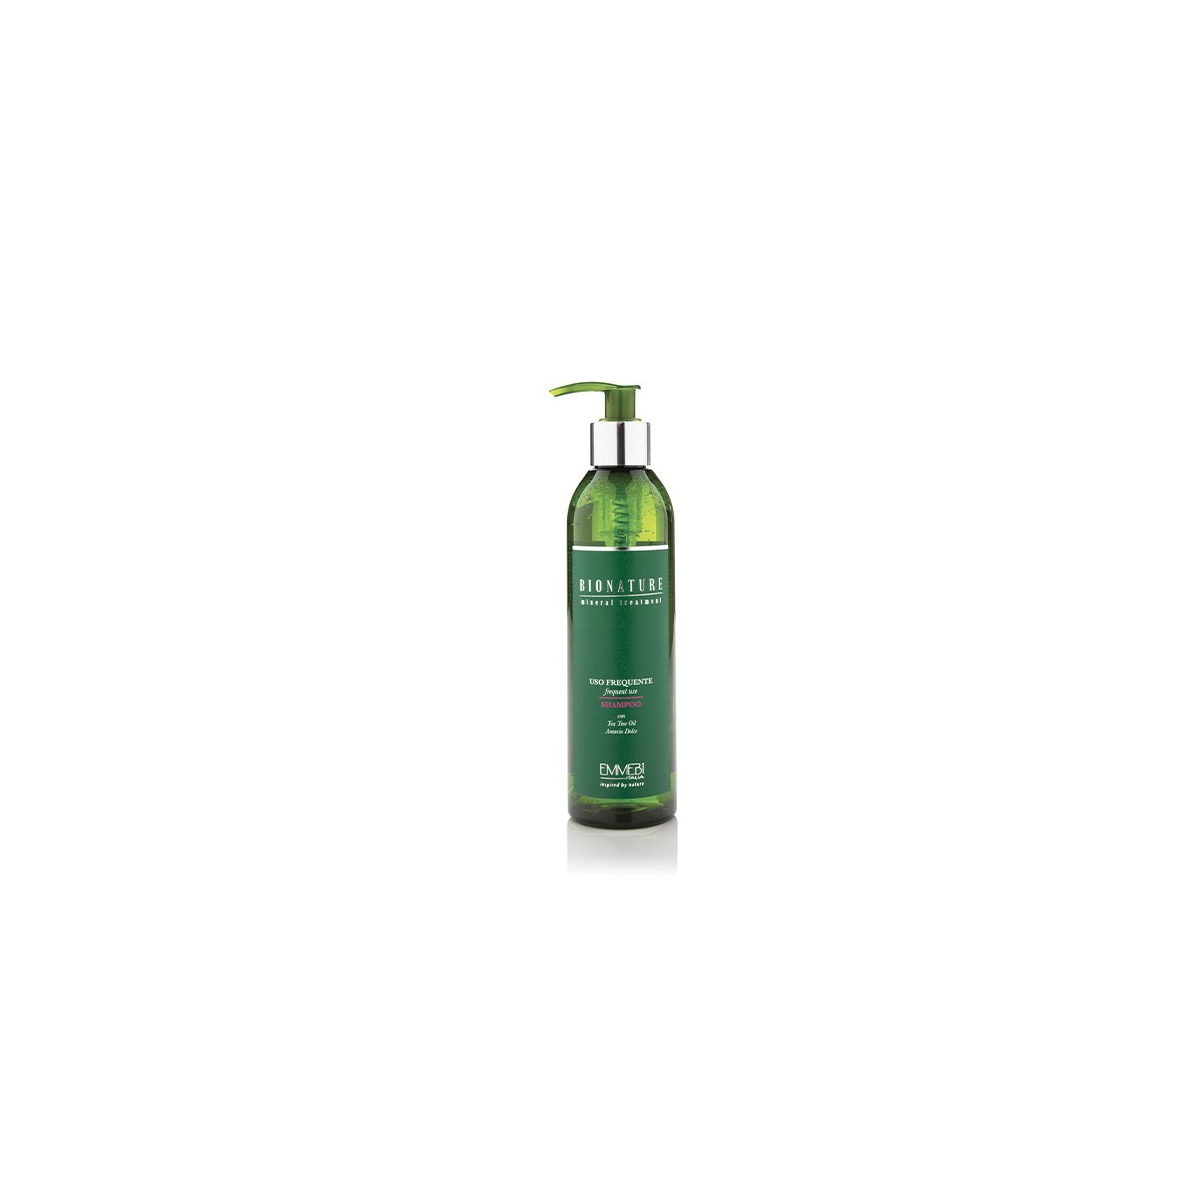 EMMEBI ITALIA - BIONATURE MINERAL TREATMENT USO FREQUENTE (250ml) Shampoo Uso frequente